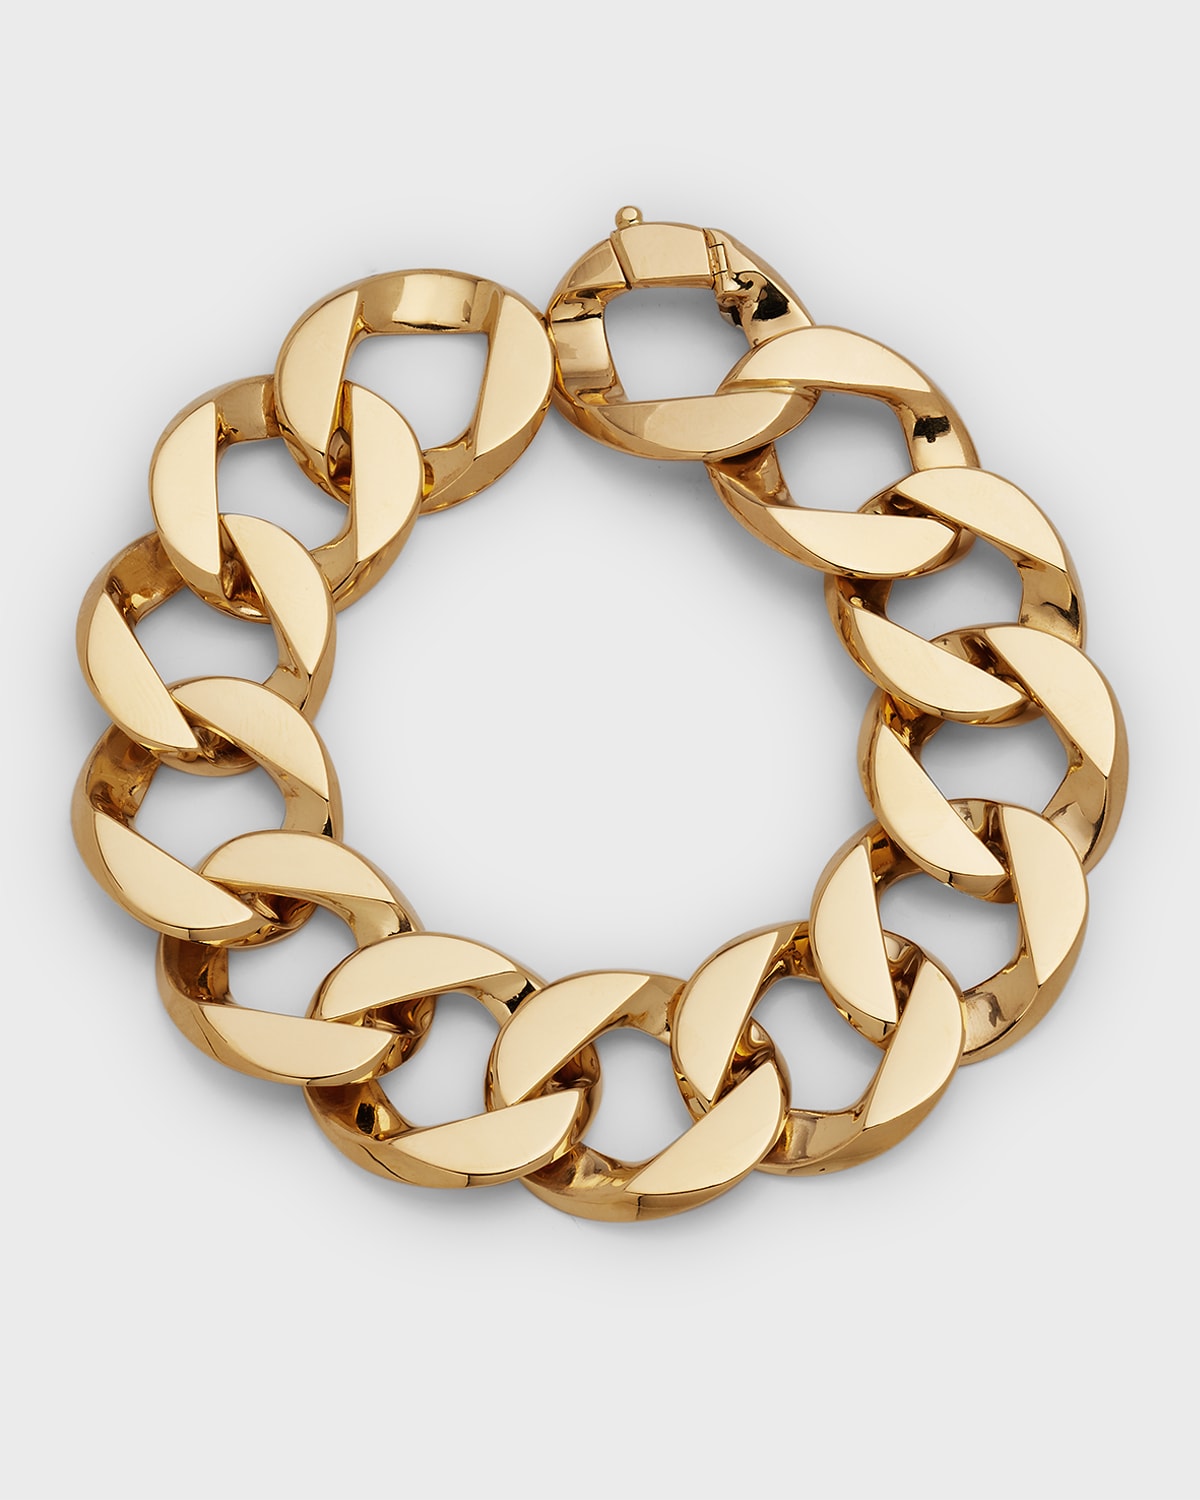 18k Yellow Gold Curb-Link Bracelet